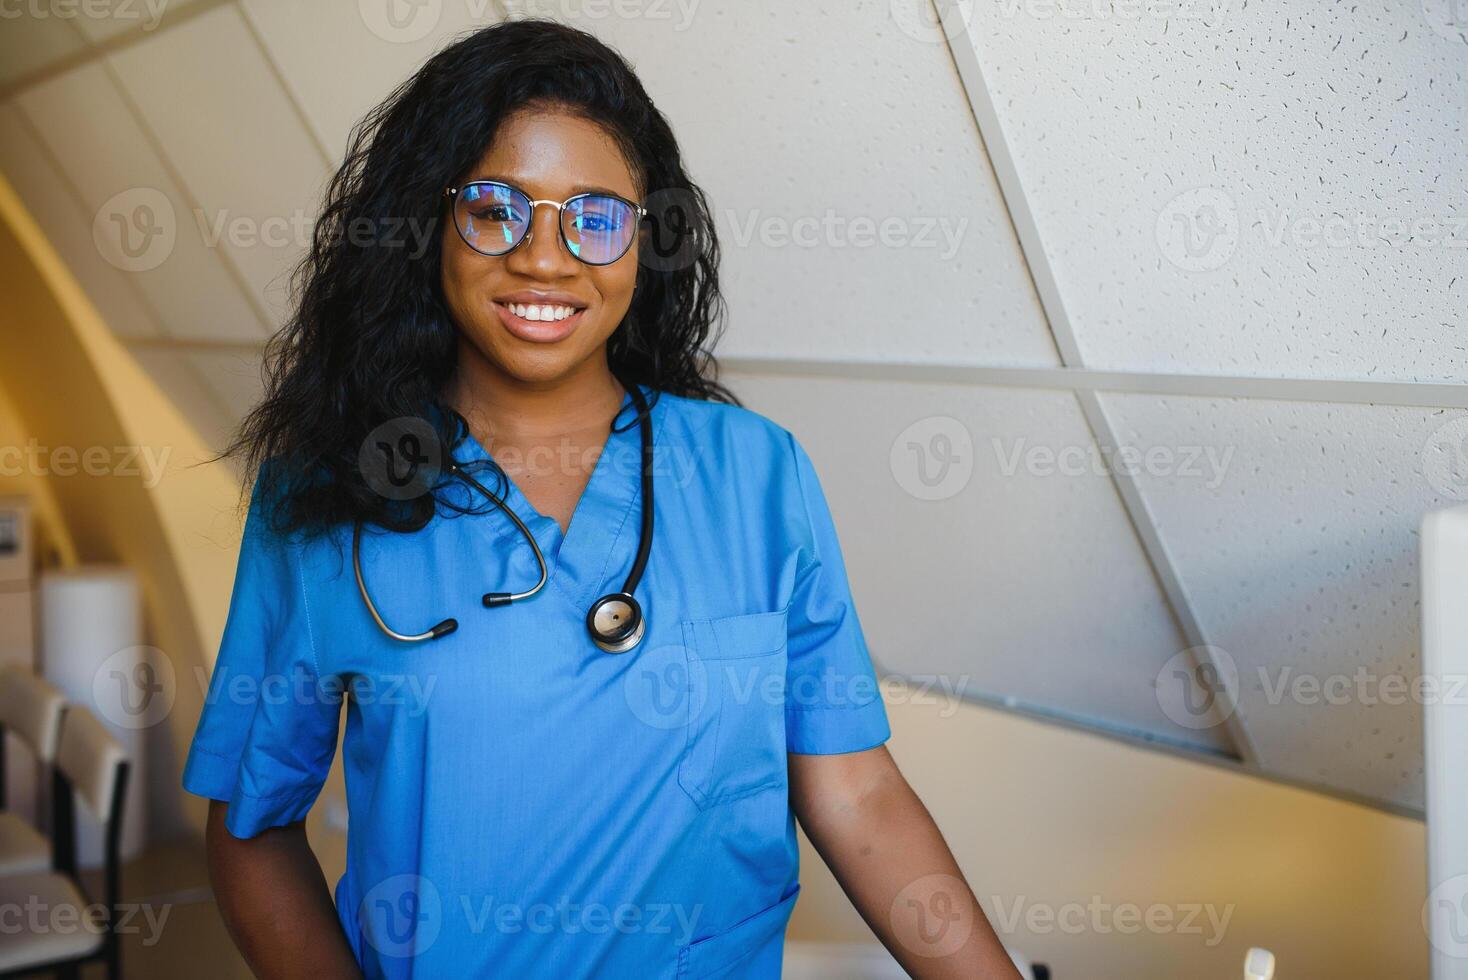 attrayant femelle africain américain médical professionnel dans Bureau photo